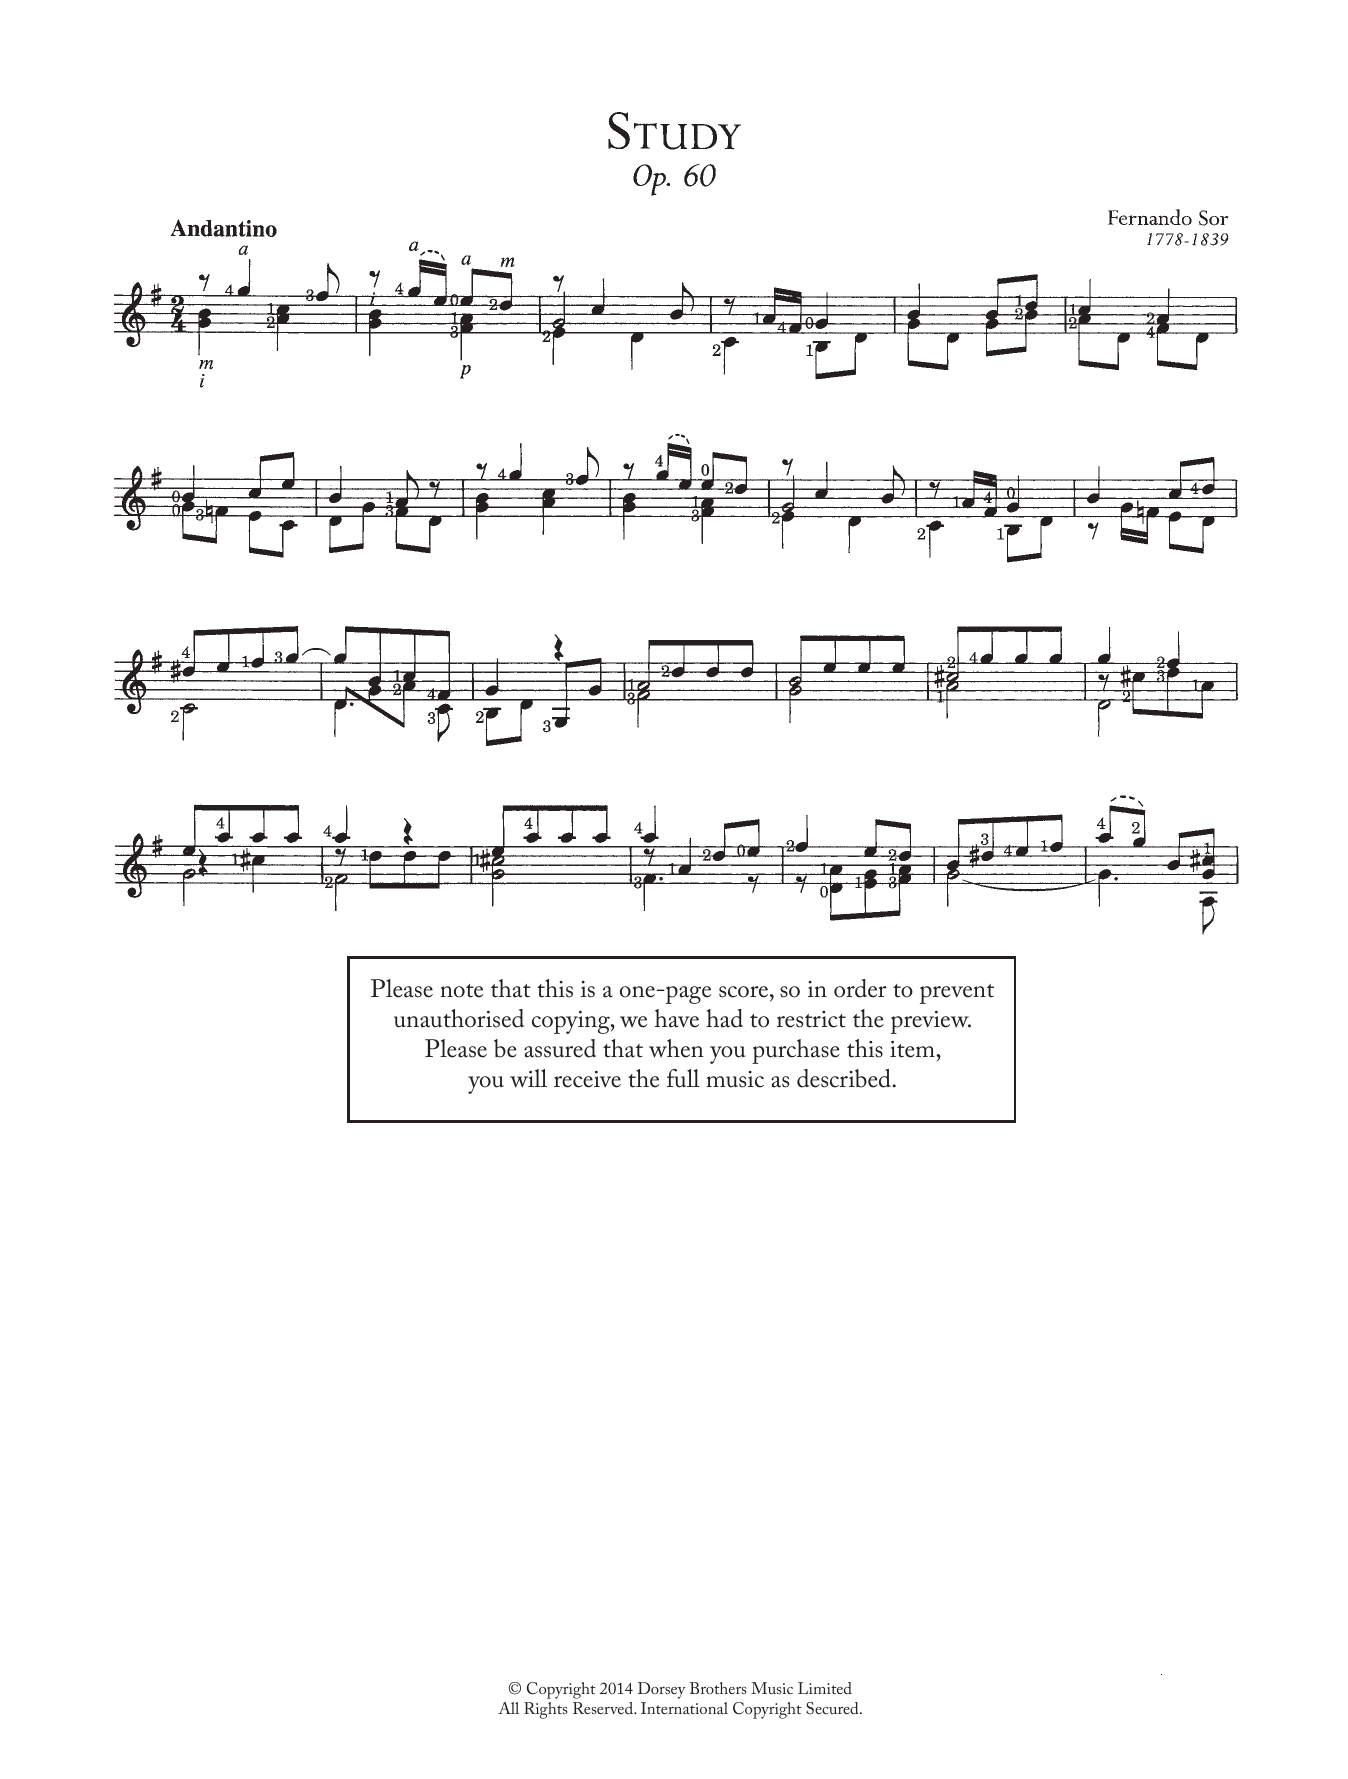 Fernando Sor Study, Op.60 Sheet Music Notes & Chords for Guitar - Download or Print PDF